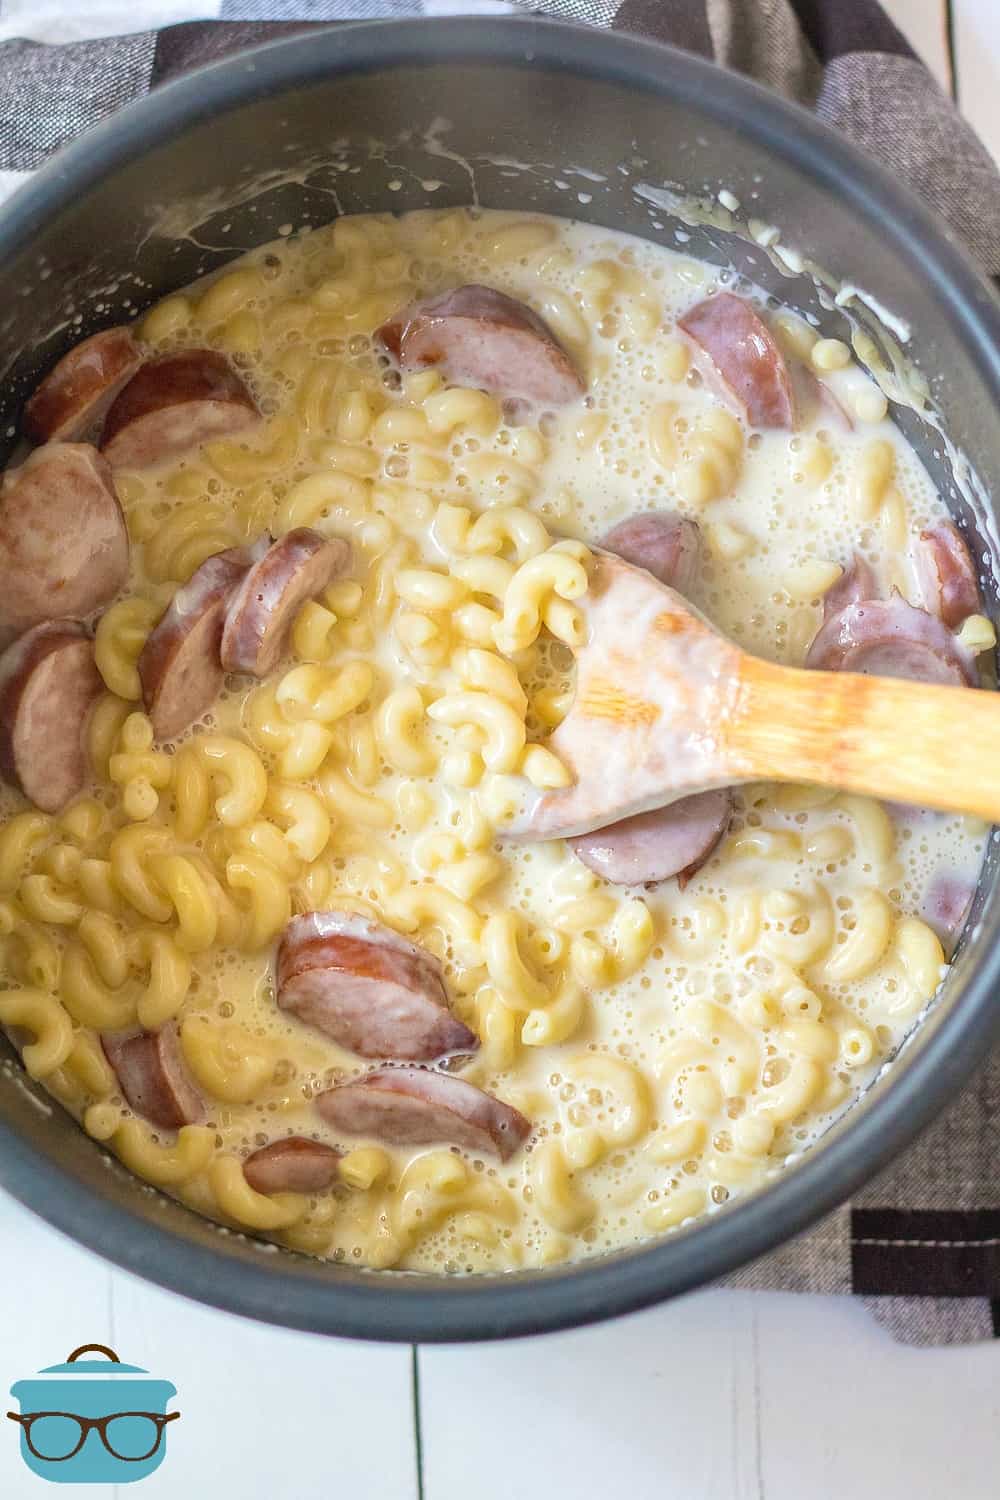 stirring macaroni and cheese and sausage together.